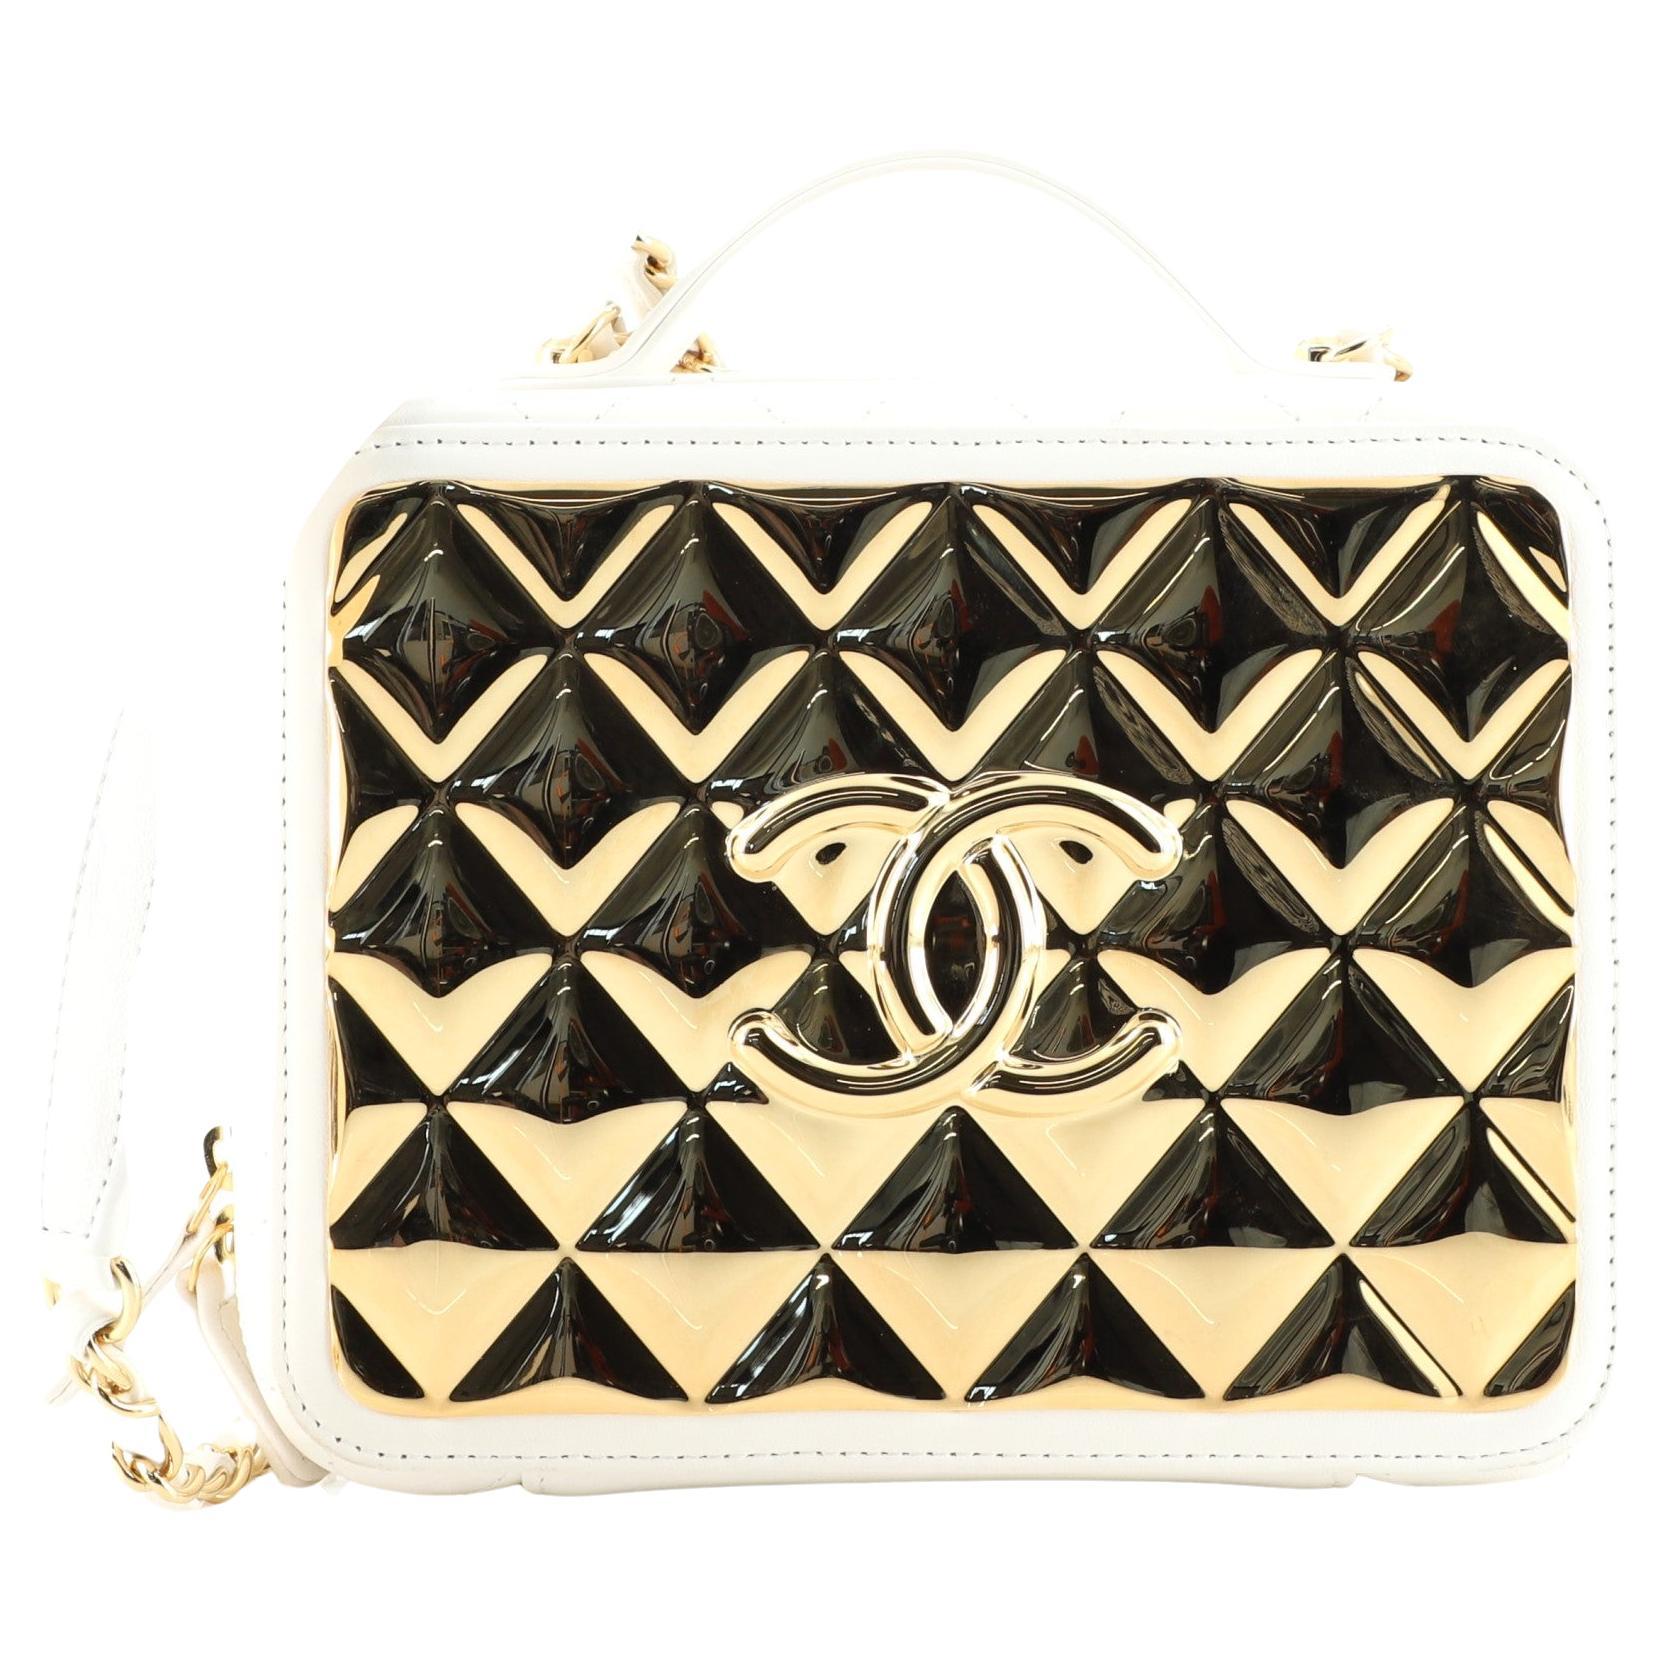 Chanel Black Quilted Lambskin Top Handle Vanity Pale Gold Hardware (Very Good), Womens Handbag